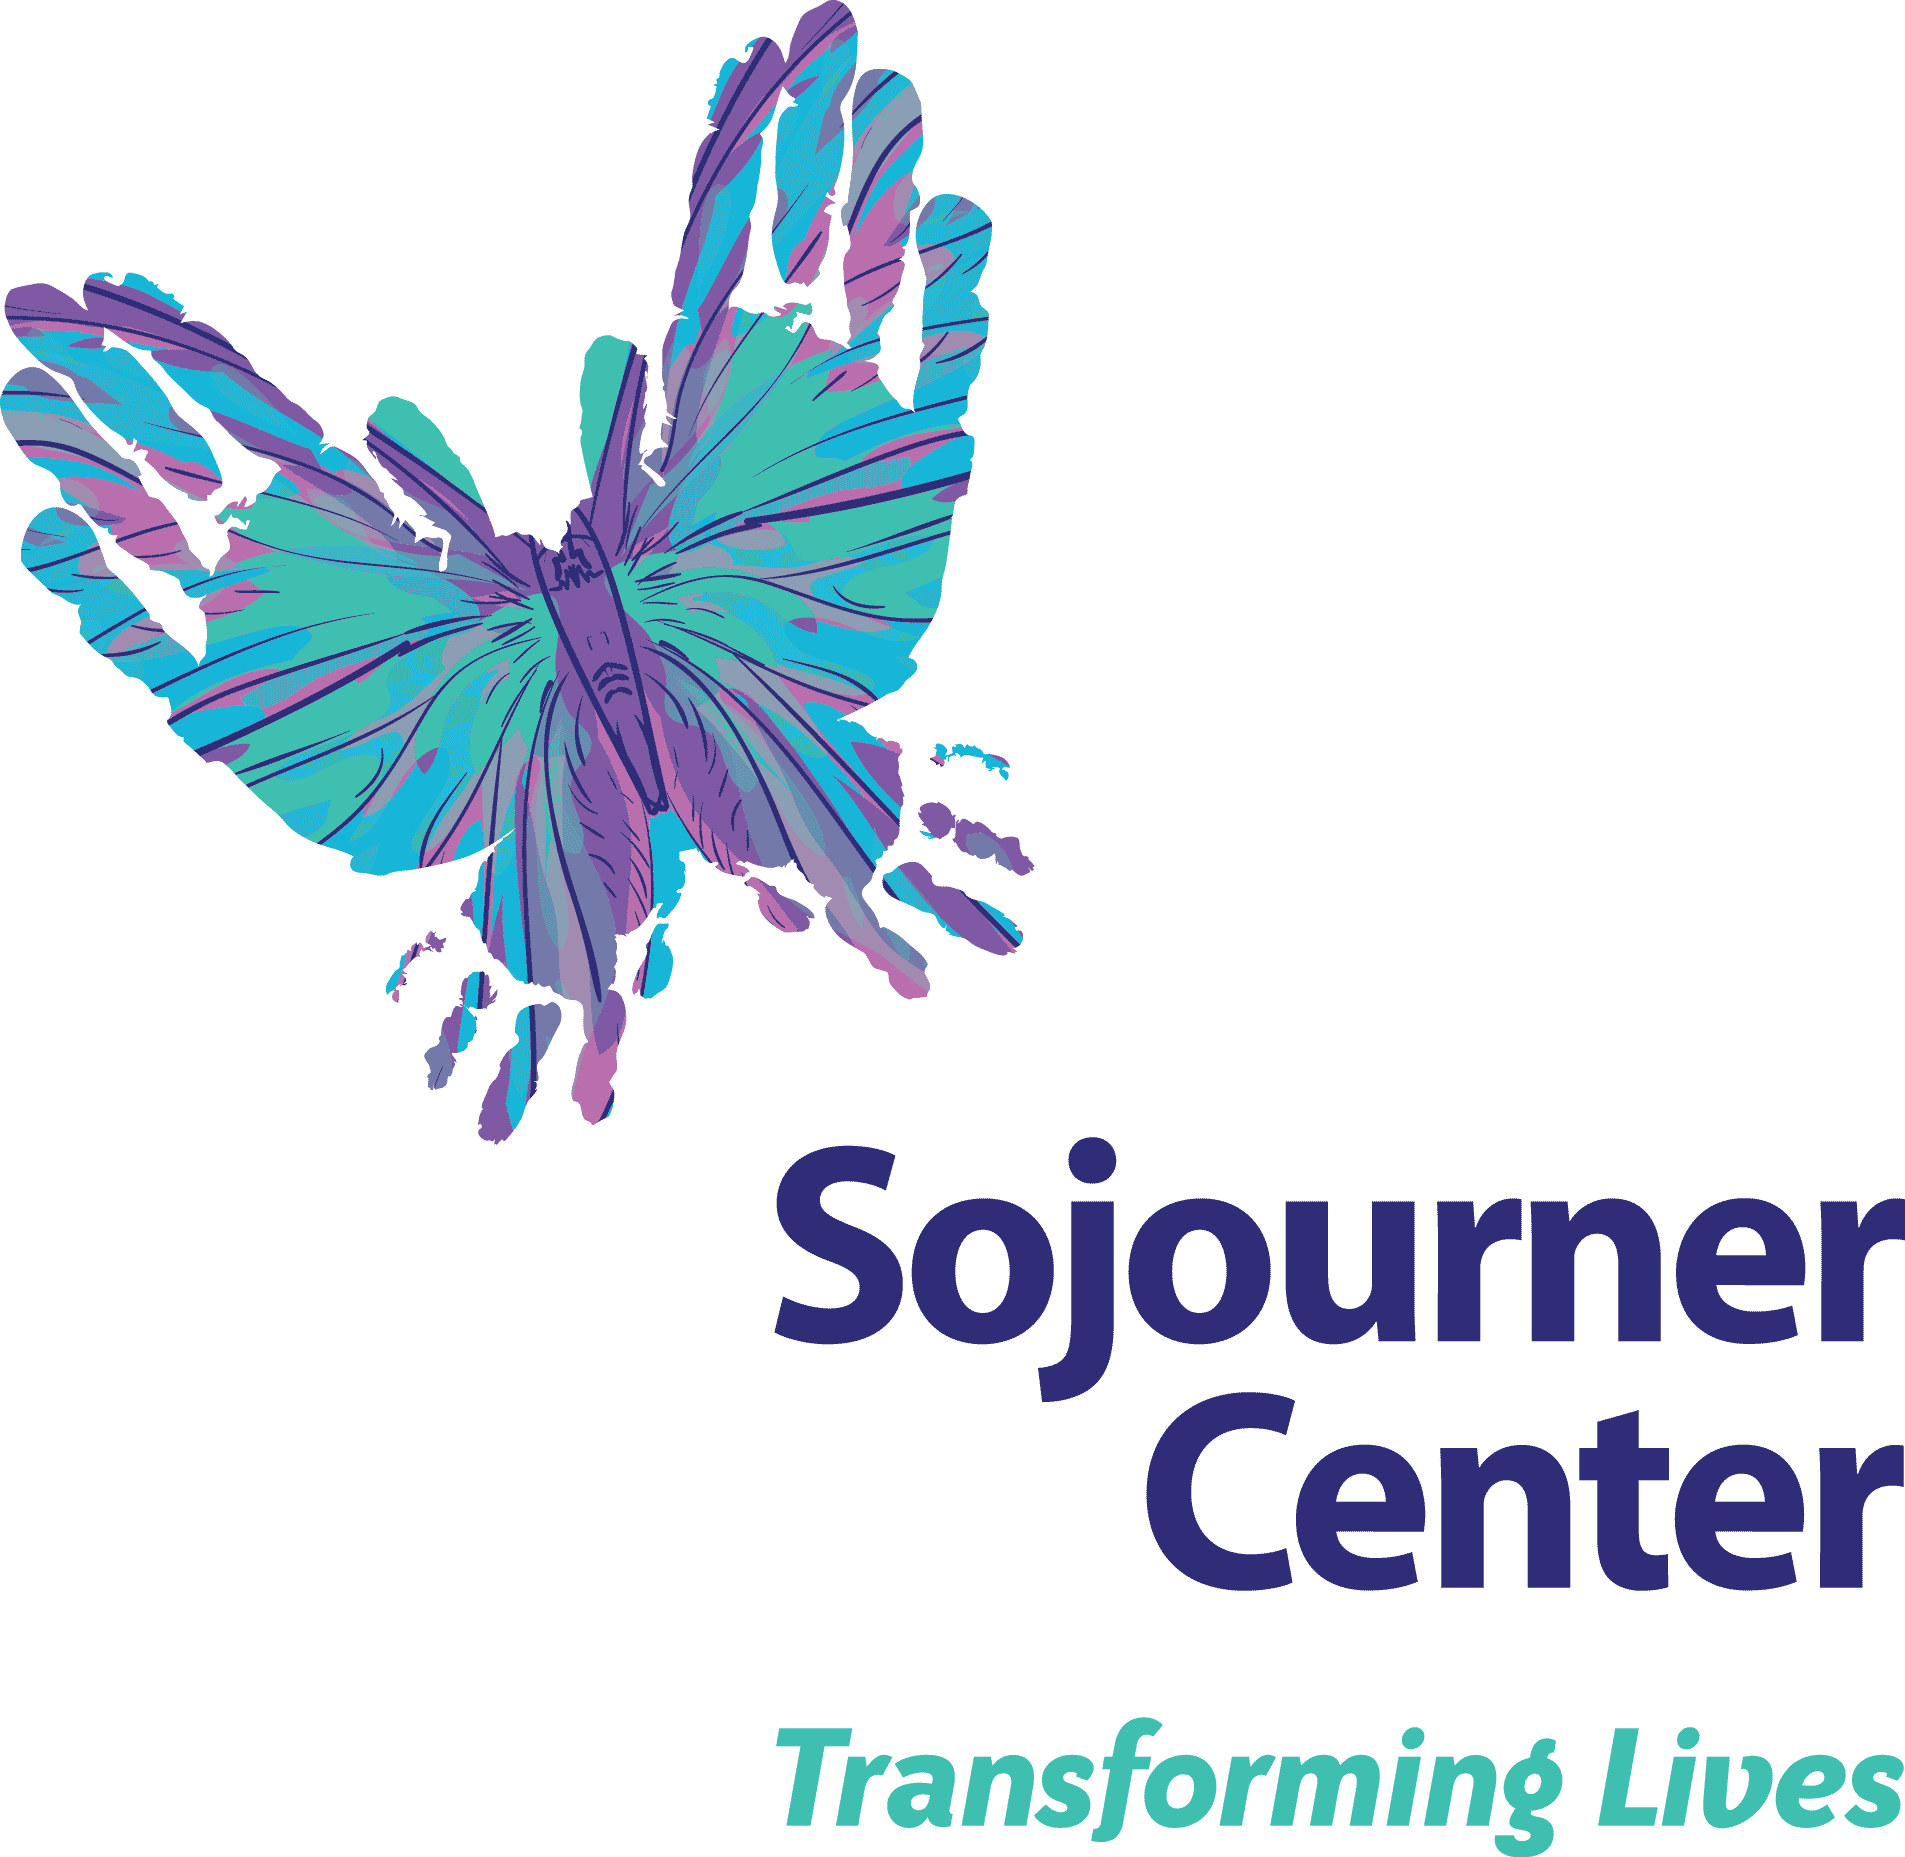 Sojourner center logo